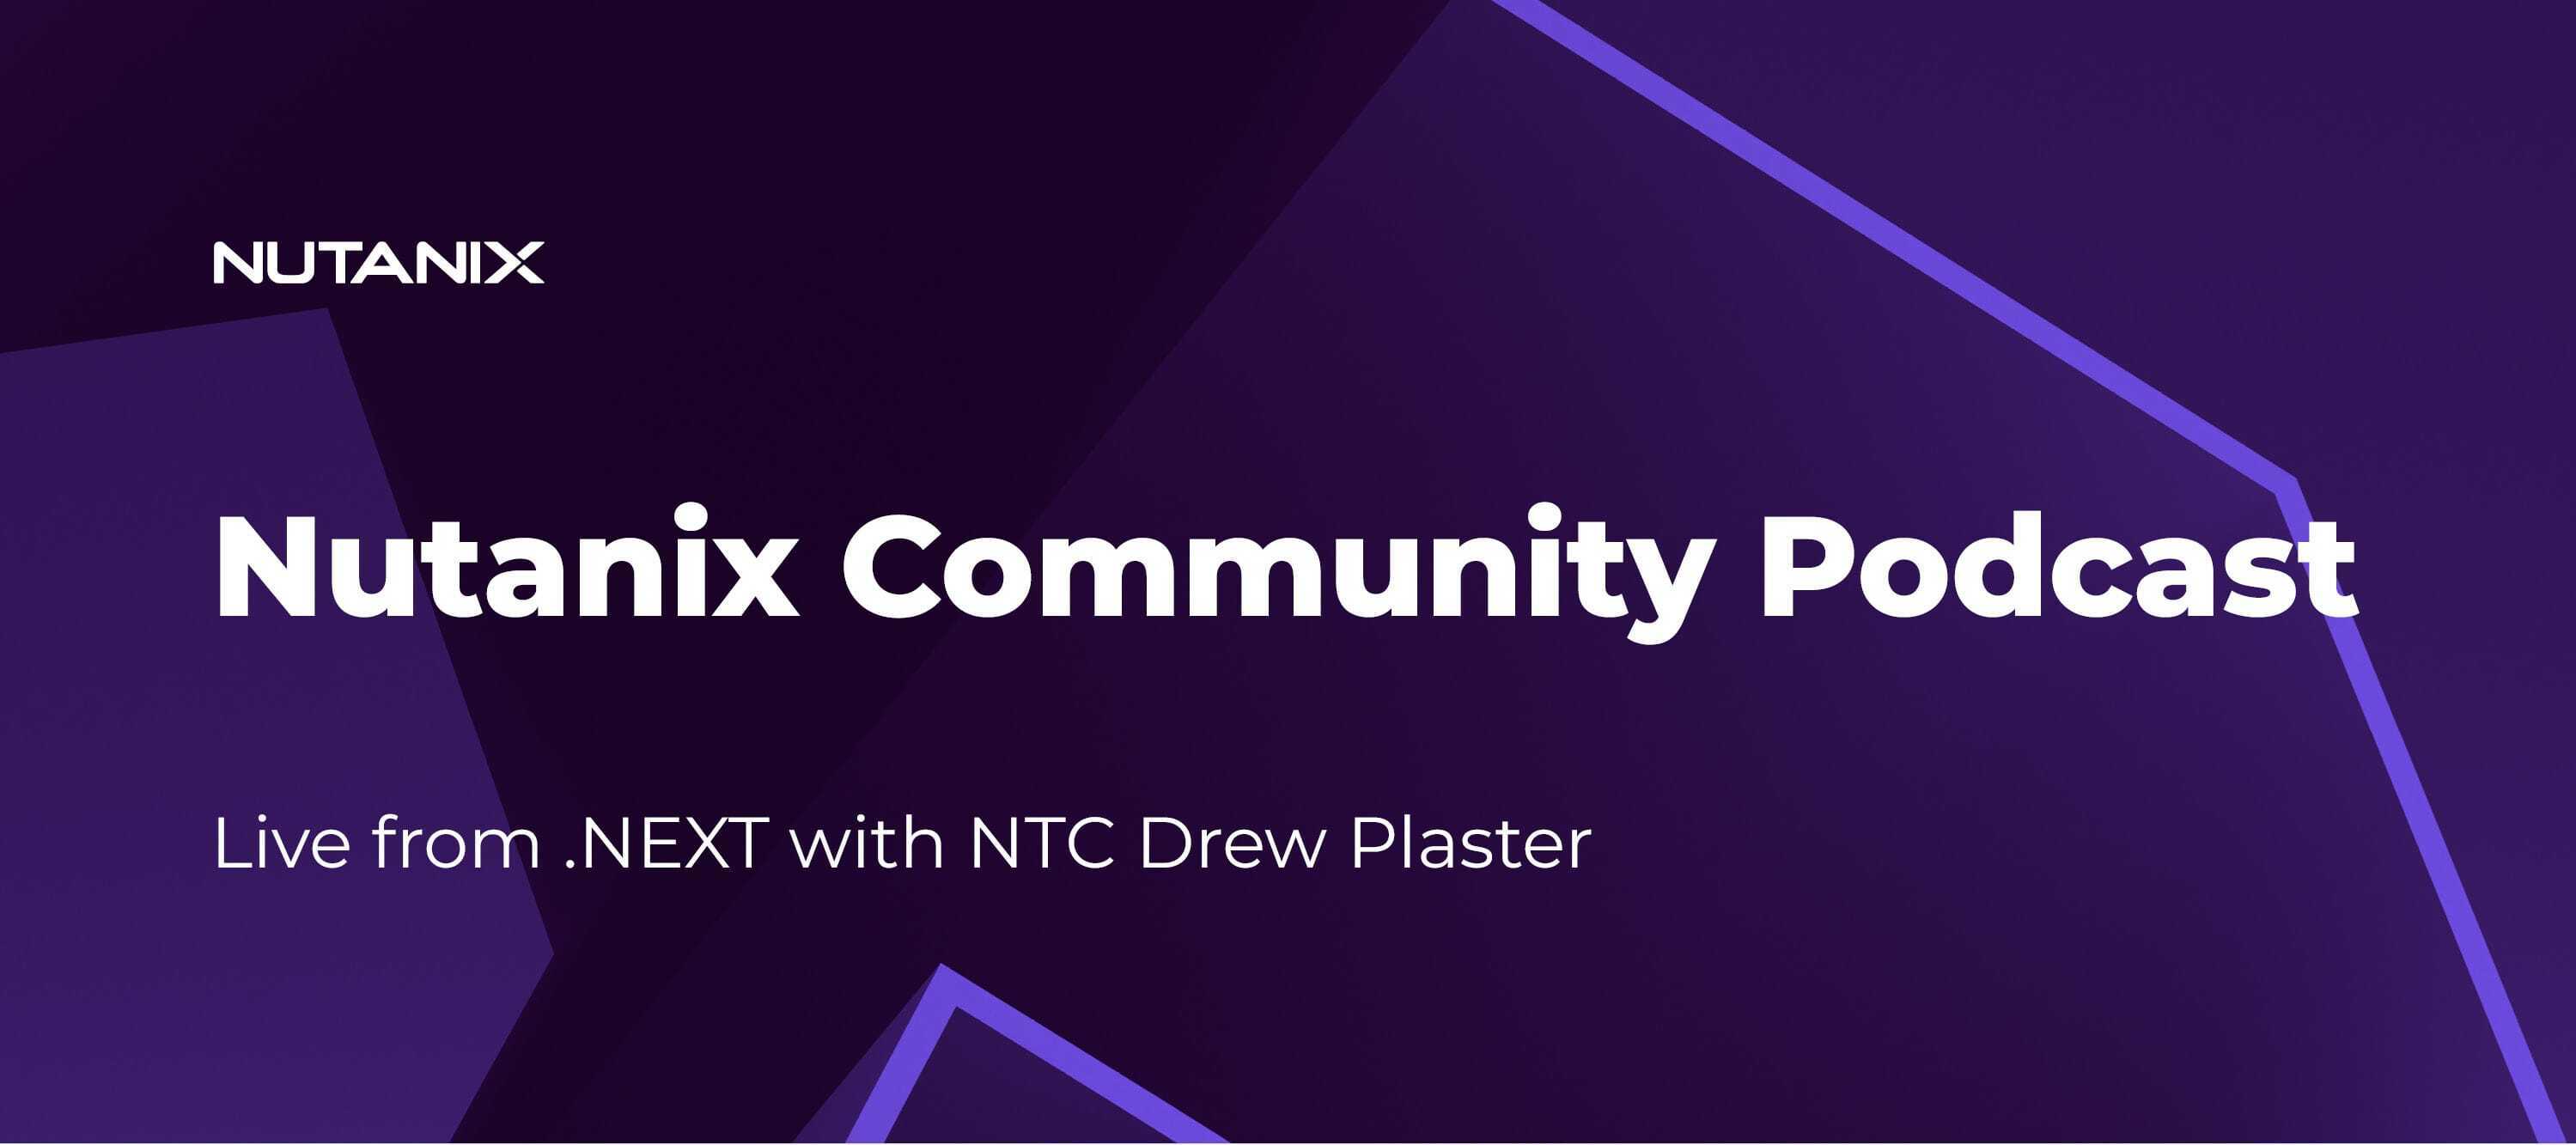 Nutanix Community Podcast: Live from .NEXT with NTC Drew Plaster